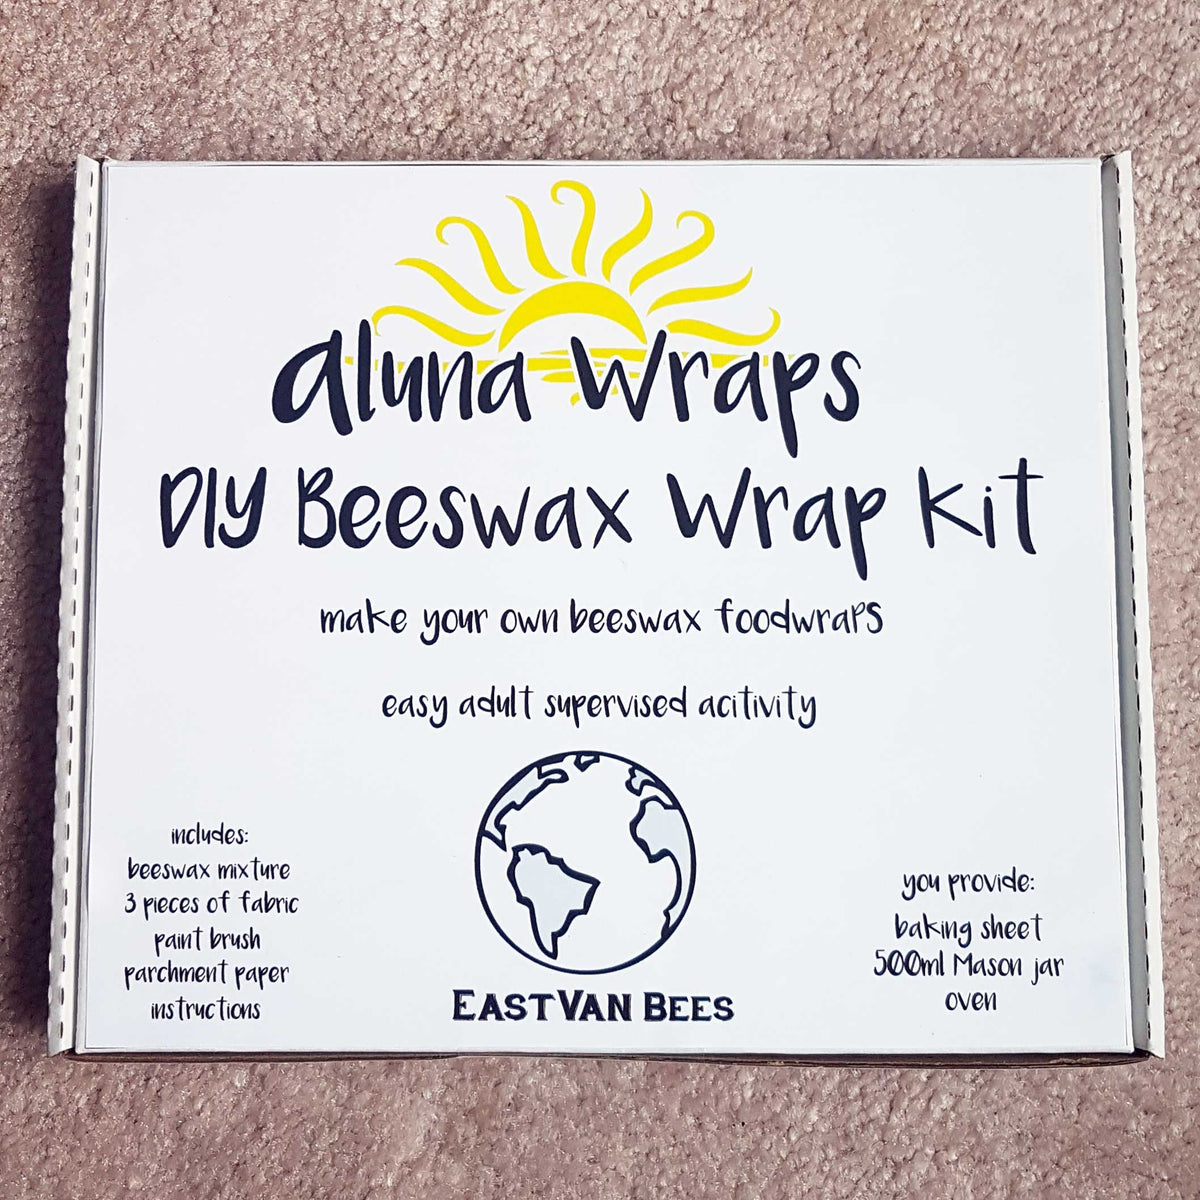 Diy Beeswax Food Wrap Kit- Eco-friendly